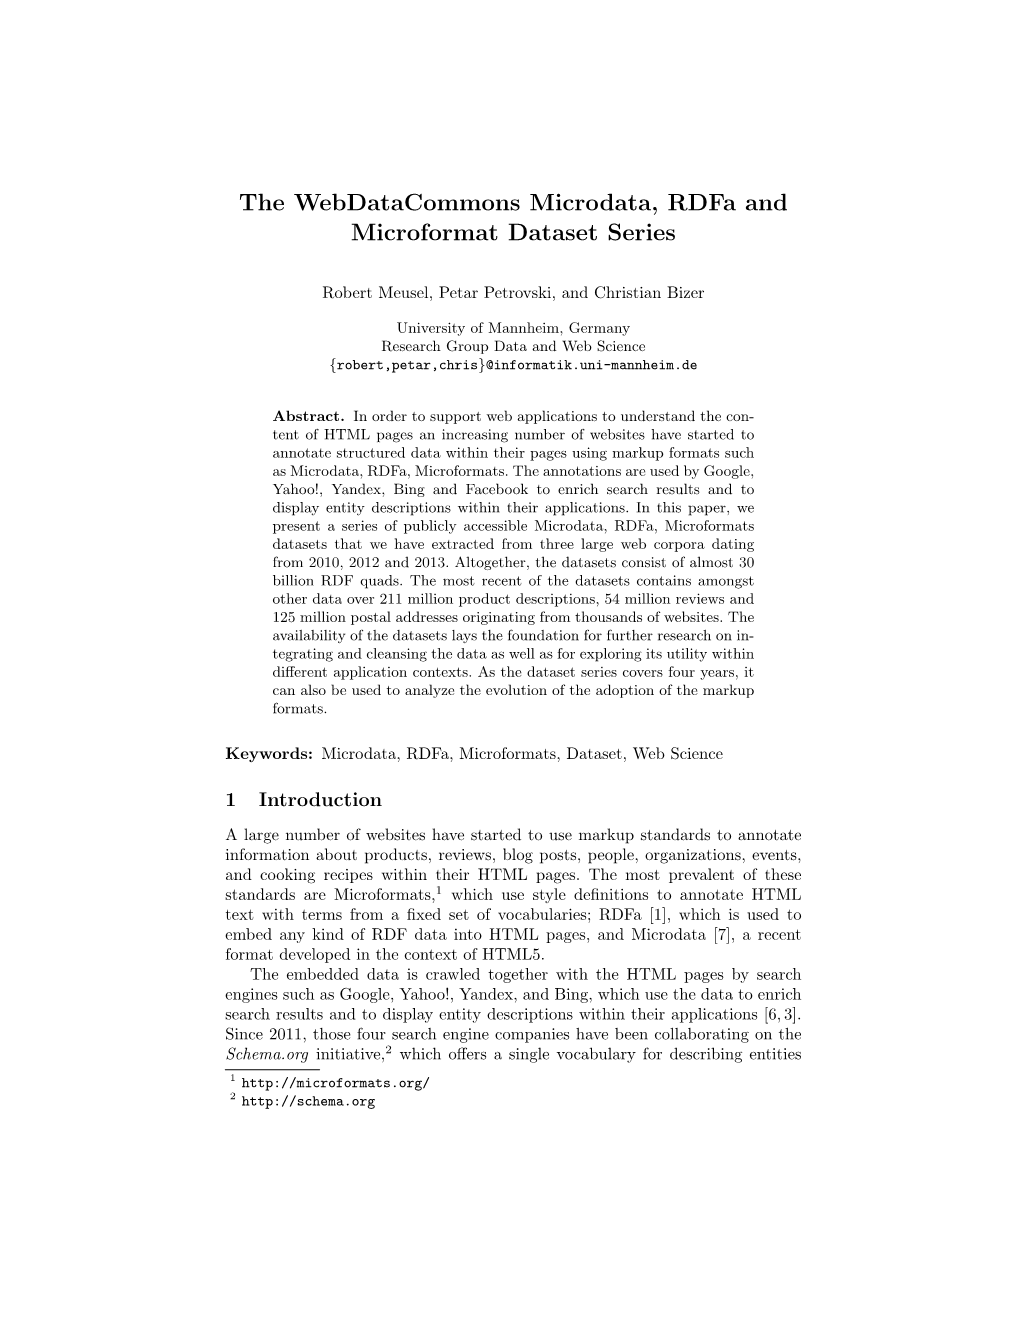 The Webdatacommons Microdata, Rdfa and Microformat Dataset Series